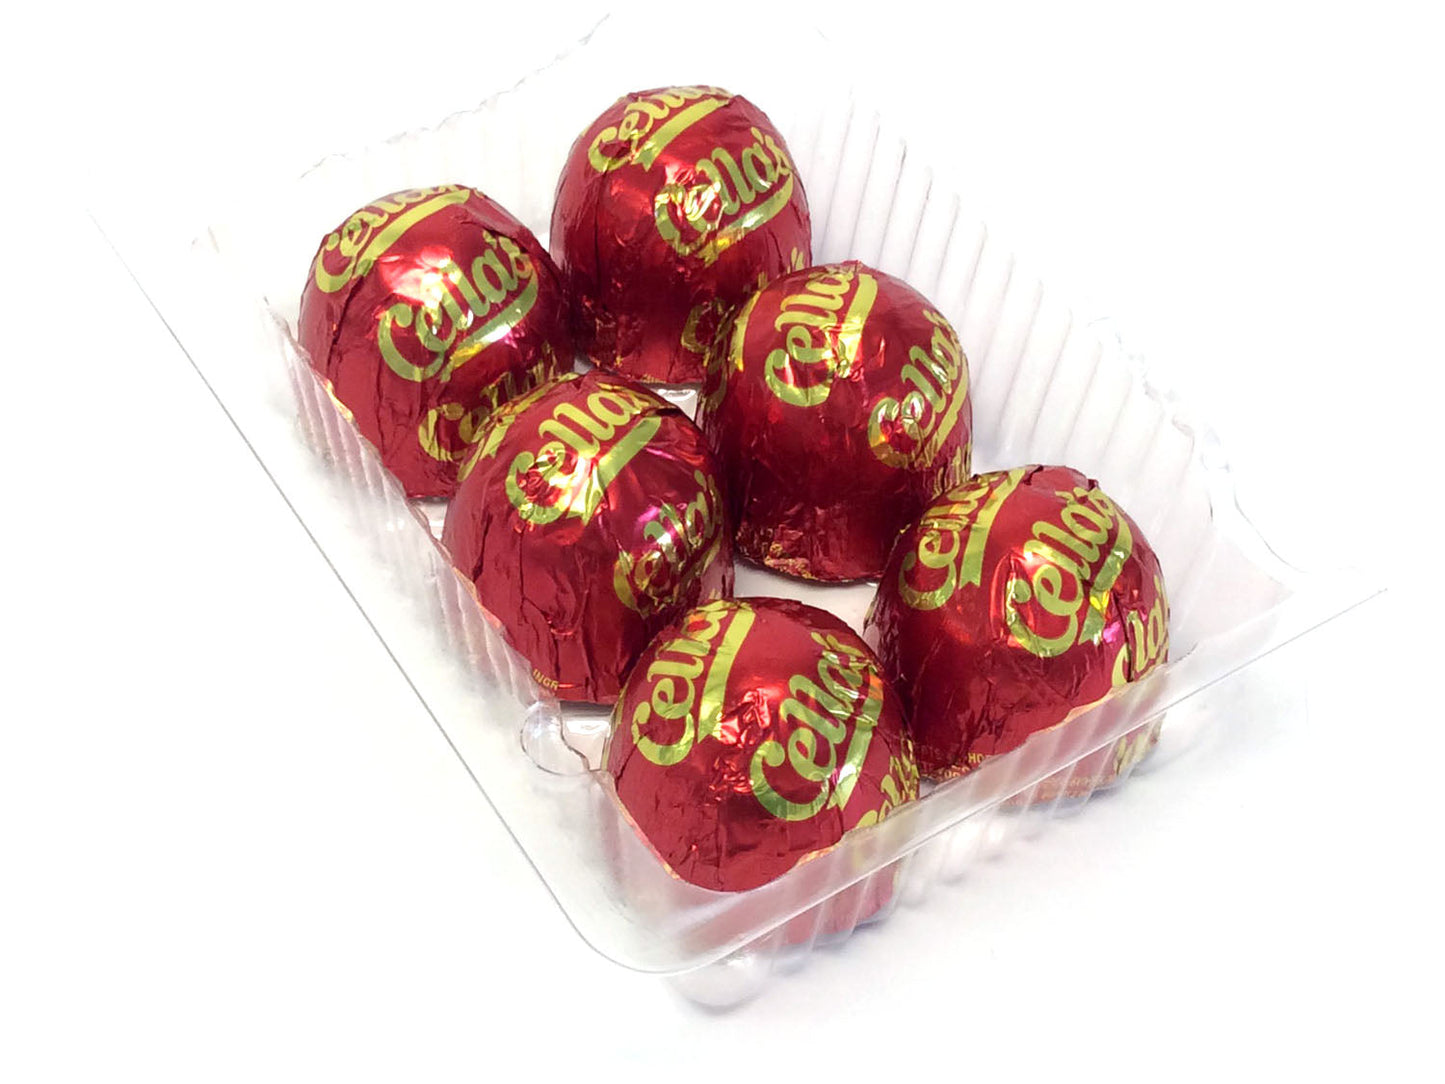 Cella's Dark Chocolate Covered Cherries - 3 oz bag unwrapped